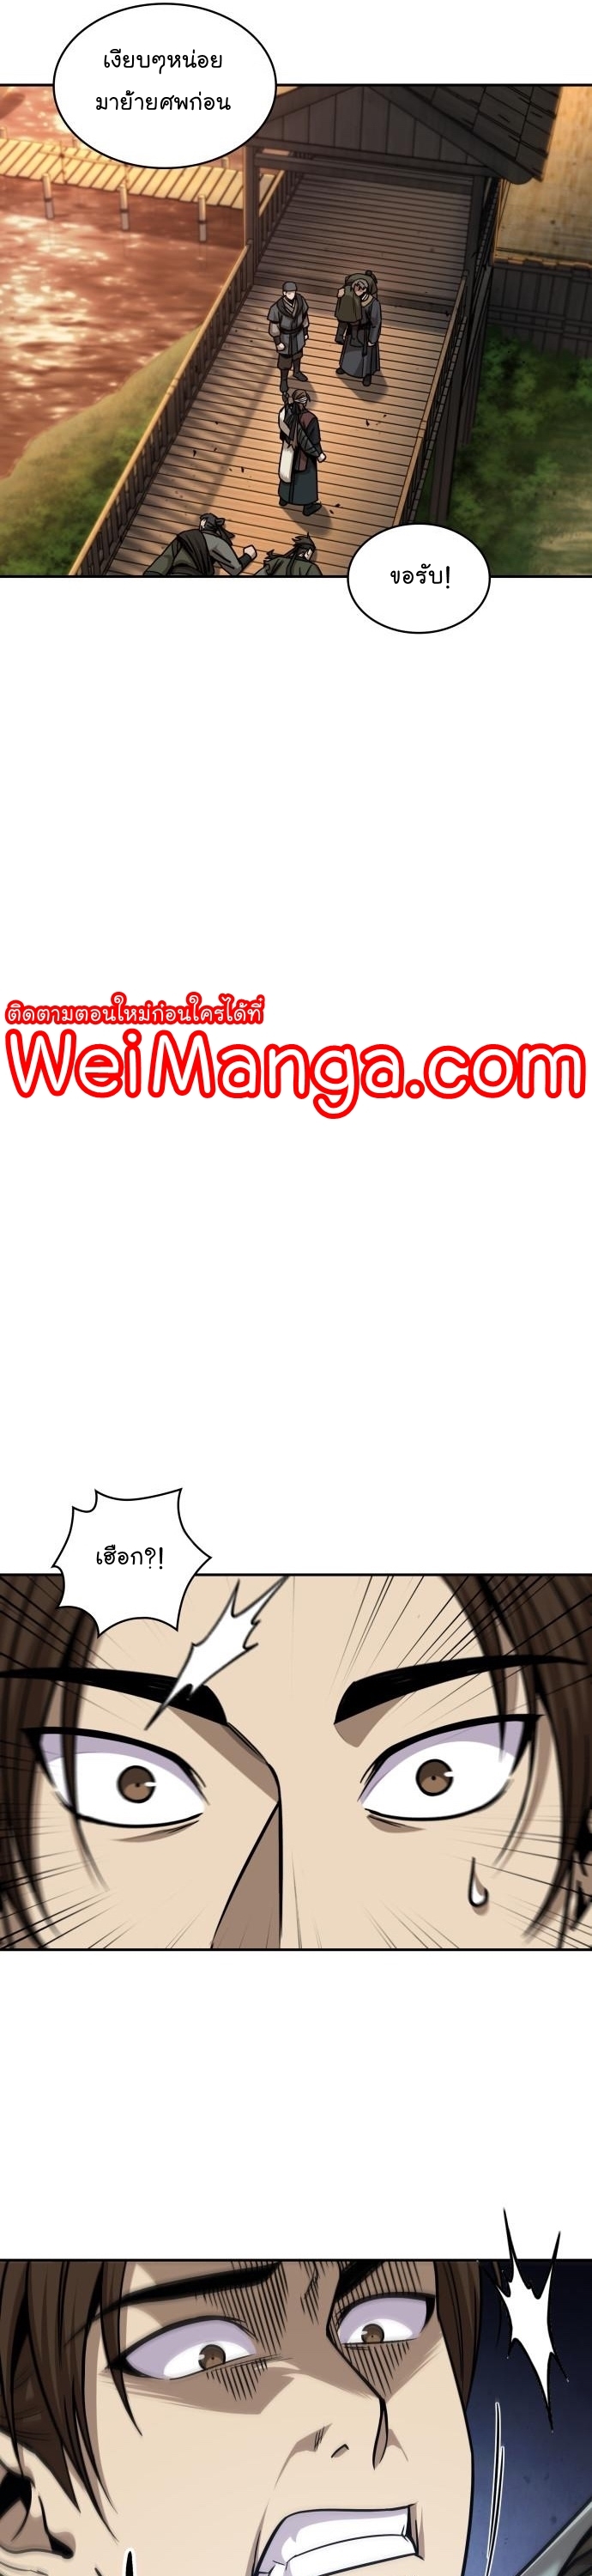 Nano Machine Wei Manga Manwha 160 (27)